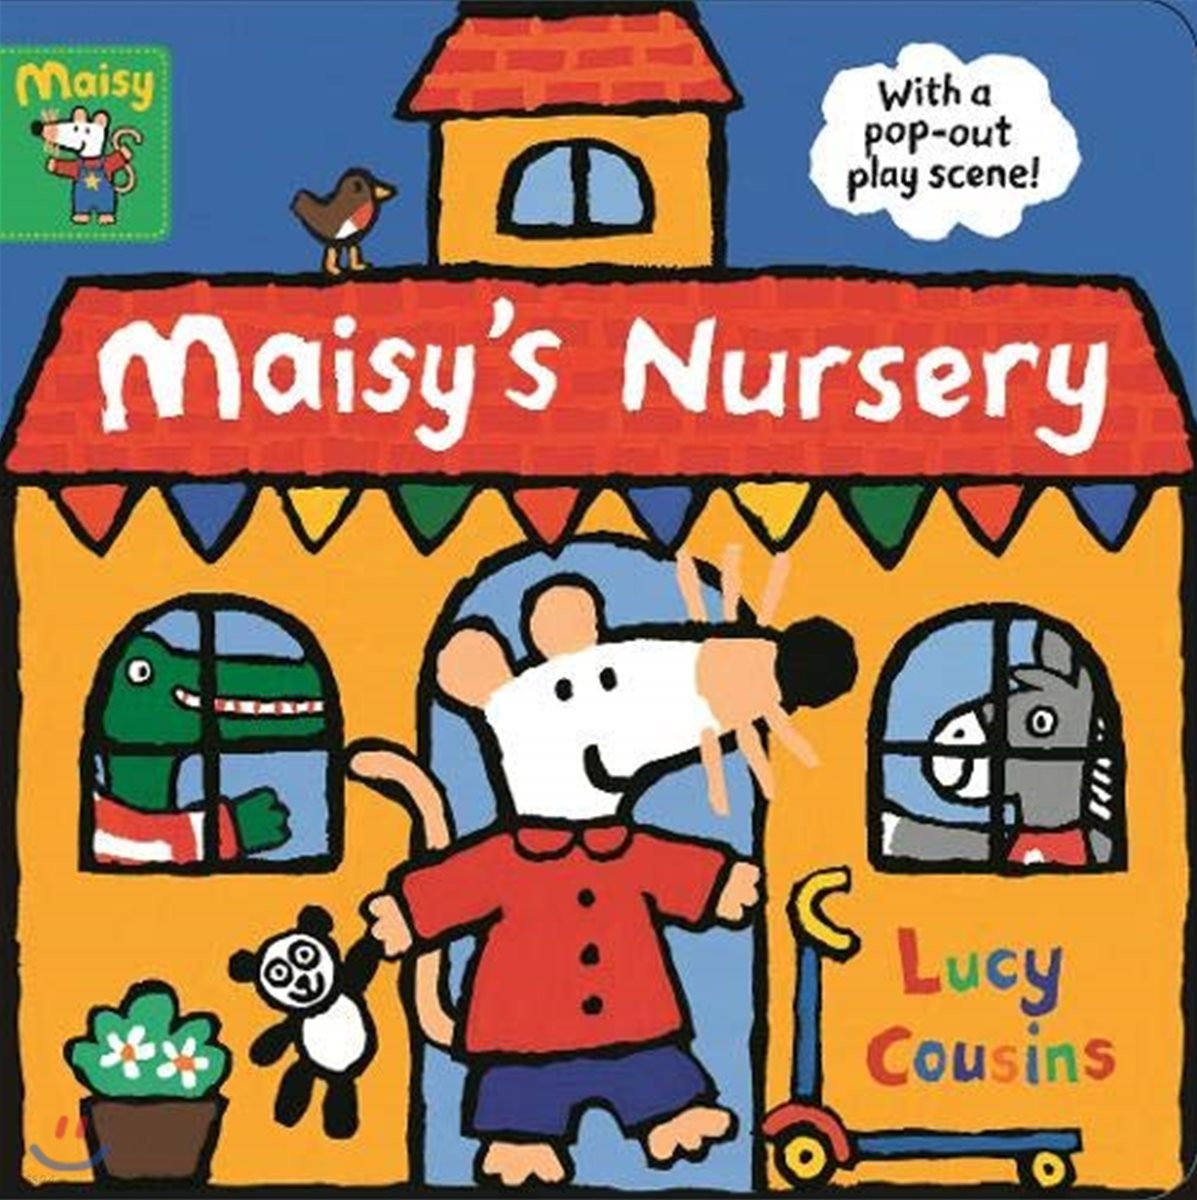 Maisys nursery: with a pop-out play